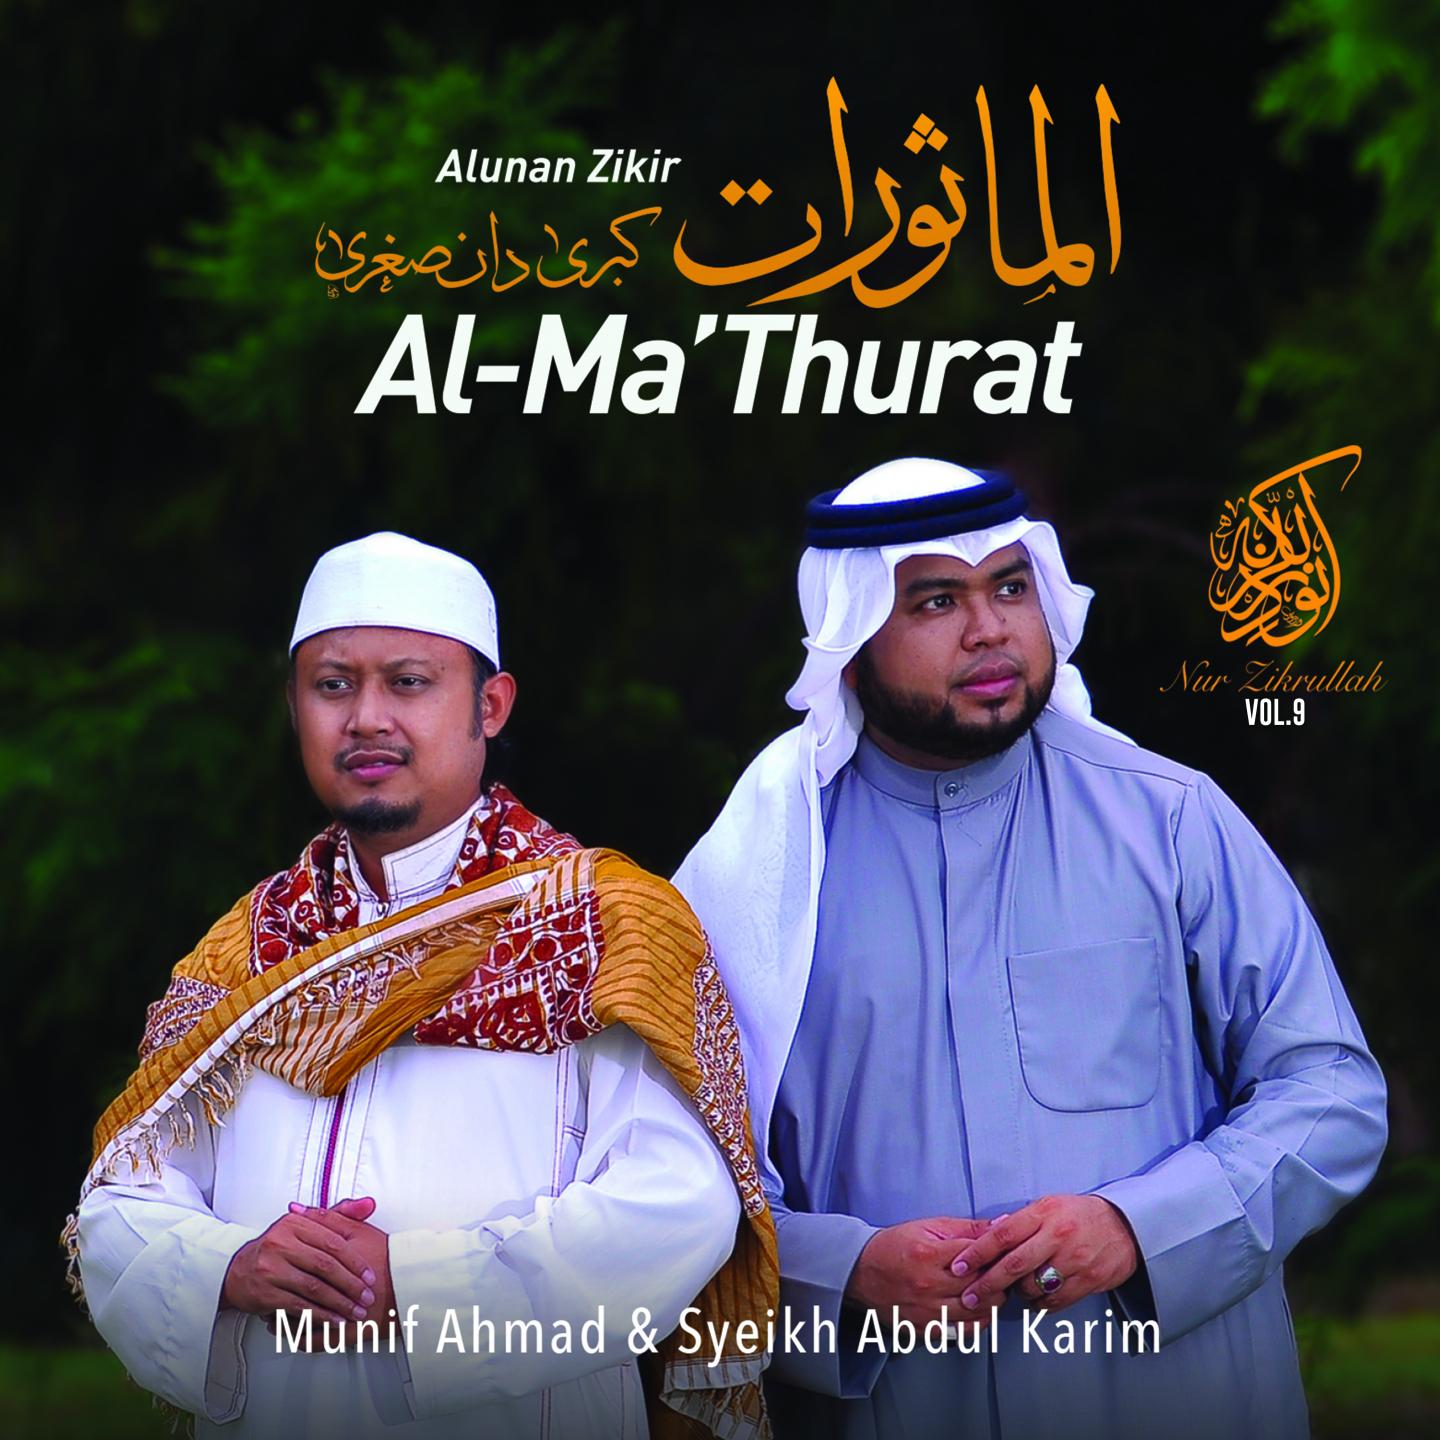 Постер альбома Nur Zikrullah, Vol. 9: Alunan Zikir Al-Ma'Thurat Kubro & Sughro